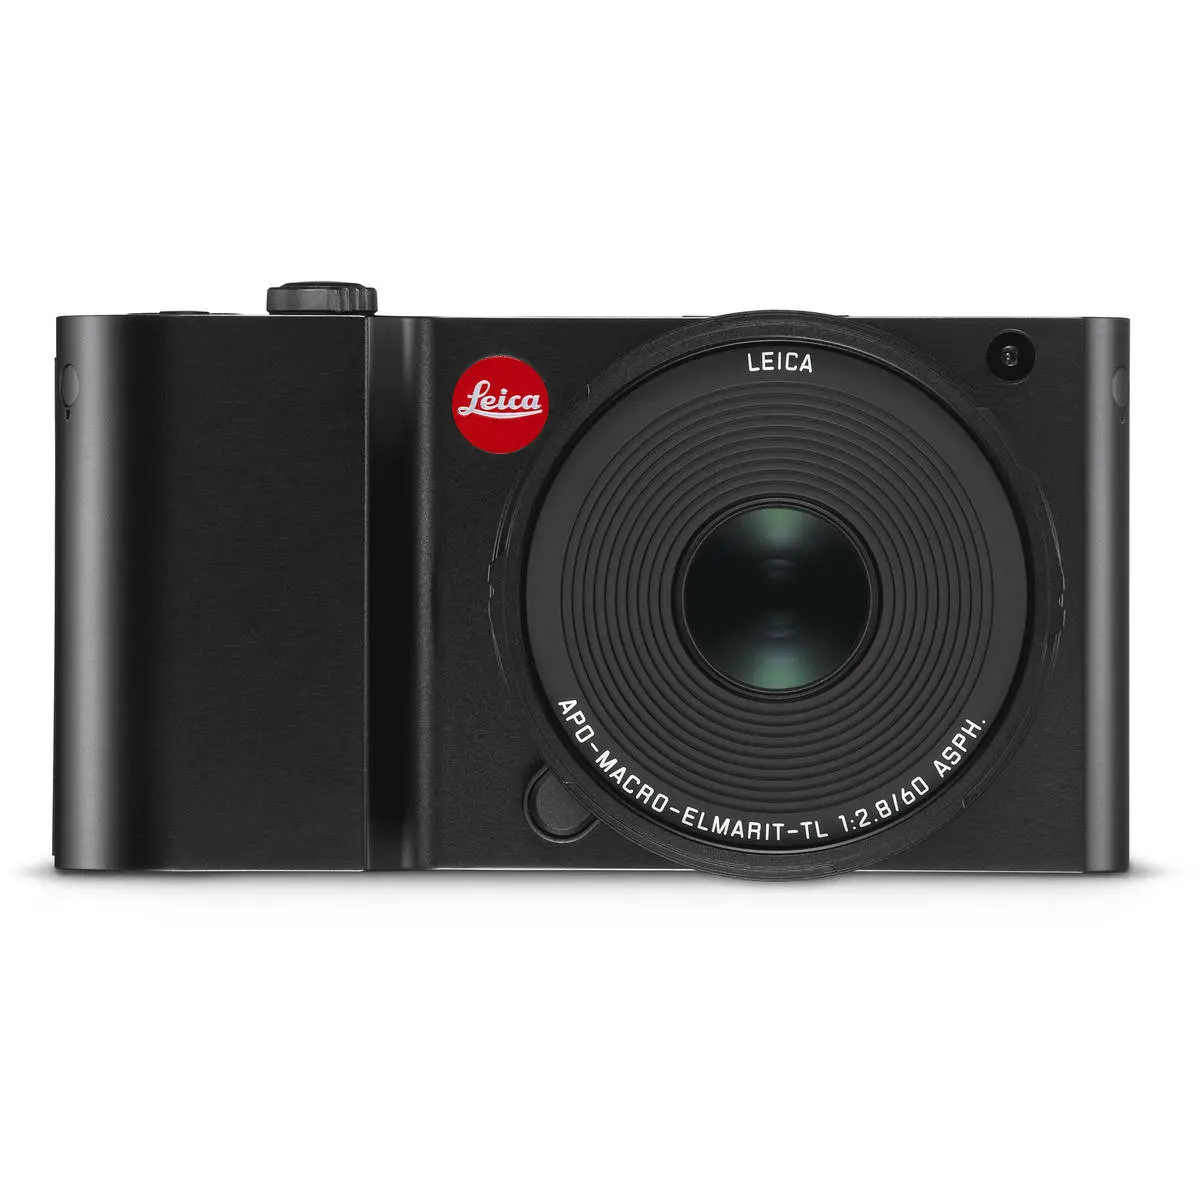 3. Leica APO-Macro-Elmarit-TL 60mm F2.8 ASPH (Black) Lens